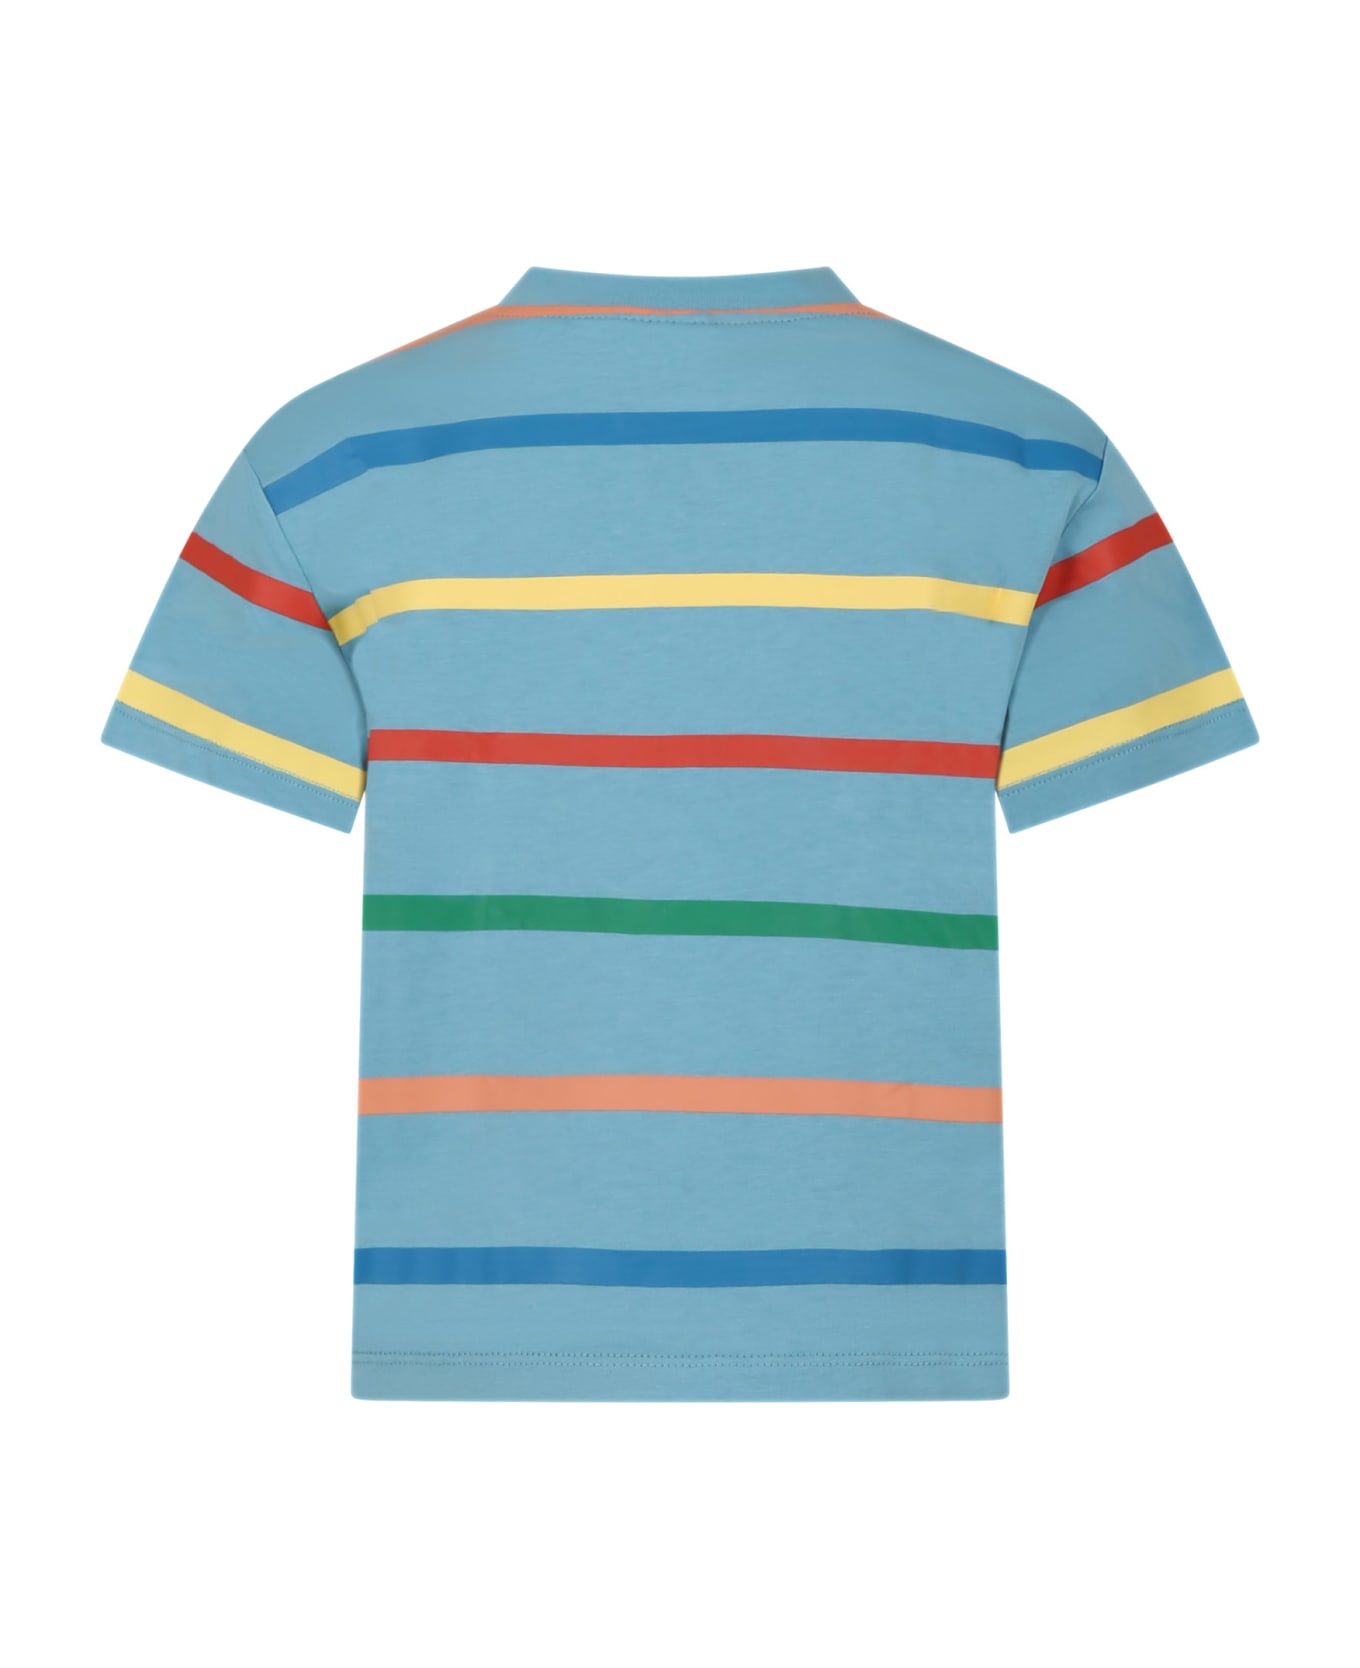 Stella McCartney Kids Light Blue T-shirt For Kids With Logo And Multicolor Stripes - Light Blue